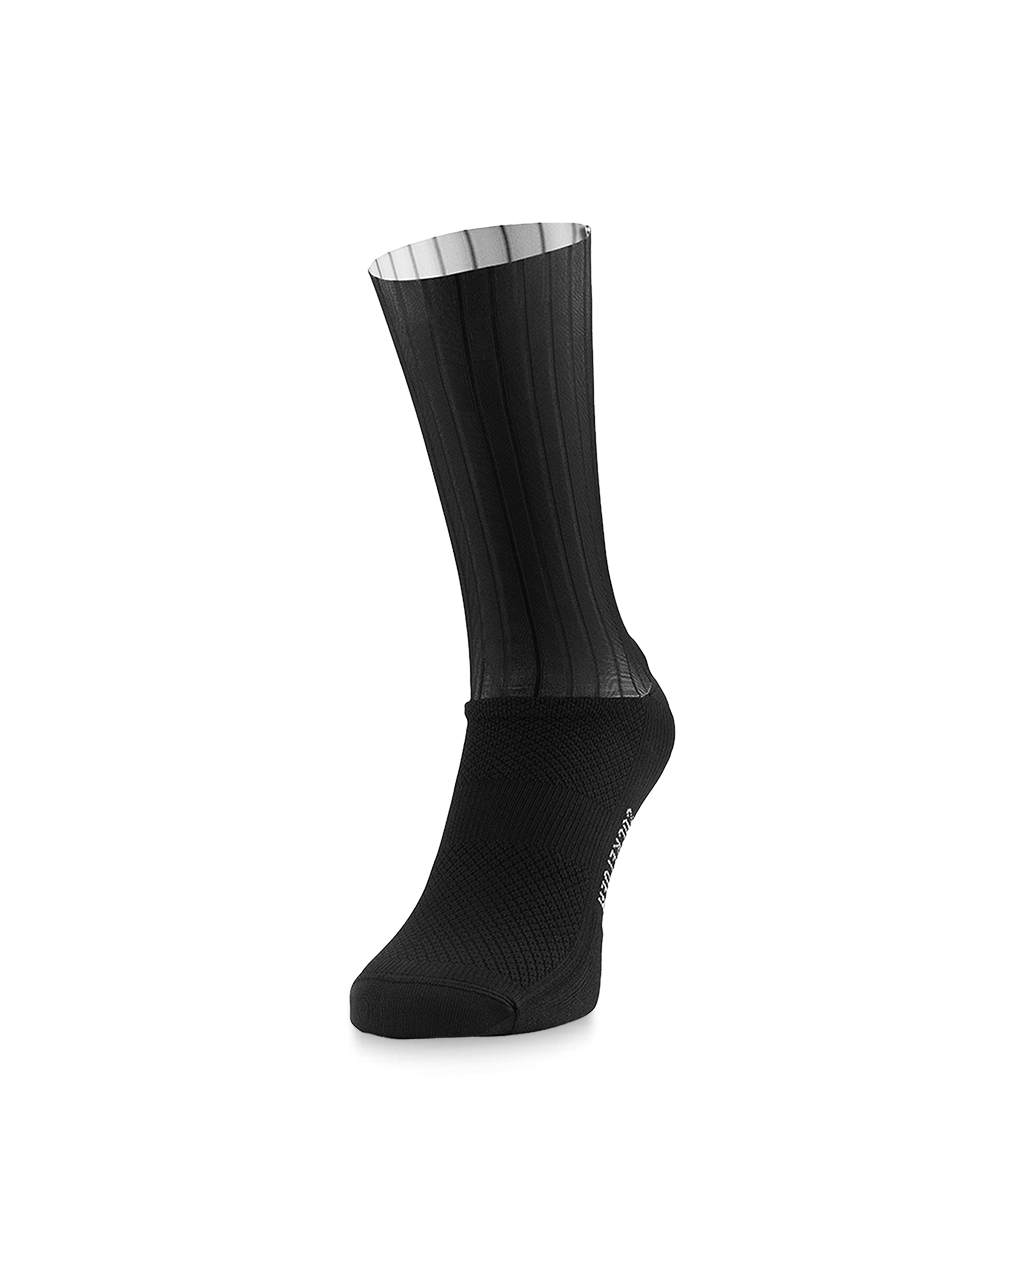 black-aero-cycling-socks-sockeloen